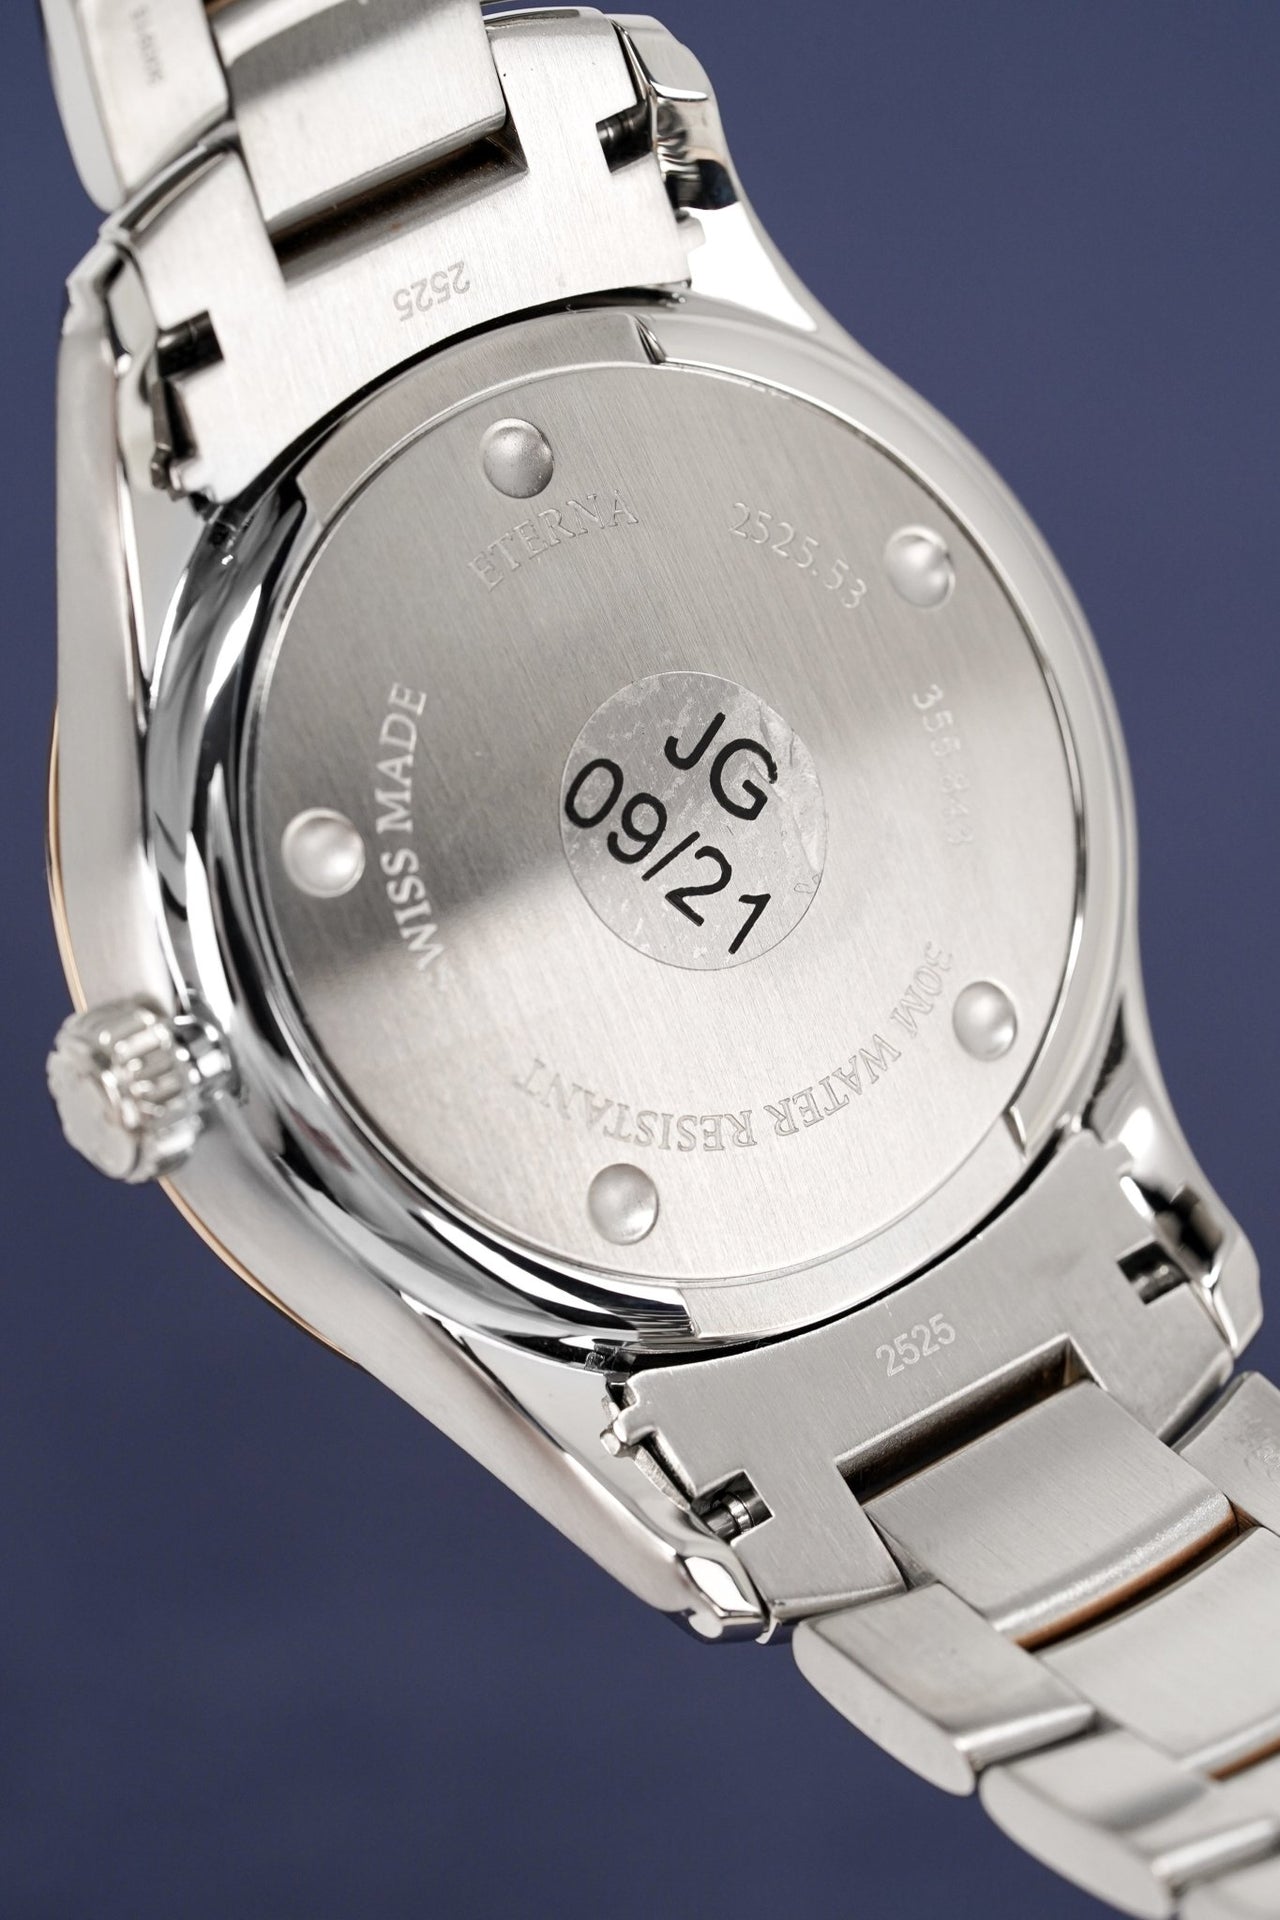 Eterna Watch Men's Artena Steel Rose PVD Quartz 2525.53.11.1725 - Watches & Crystals